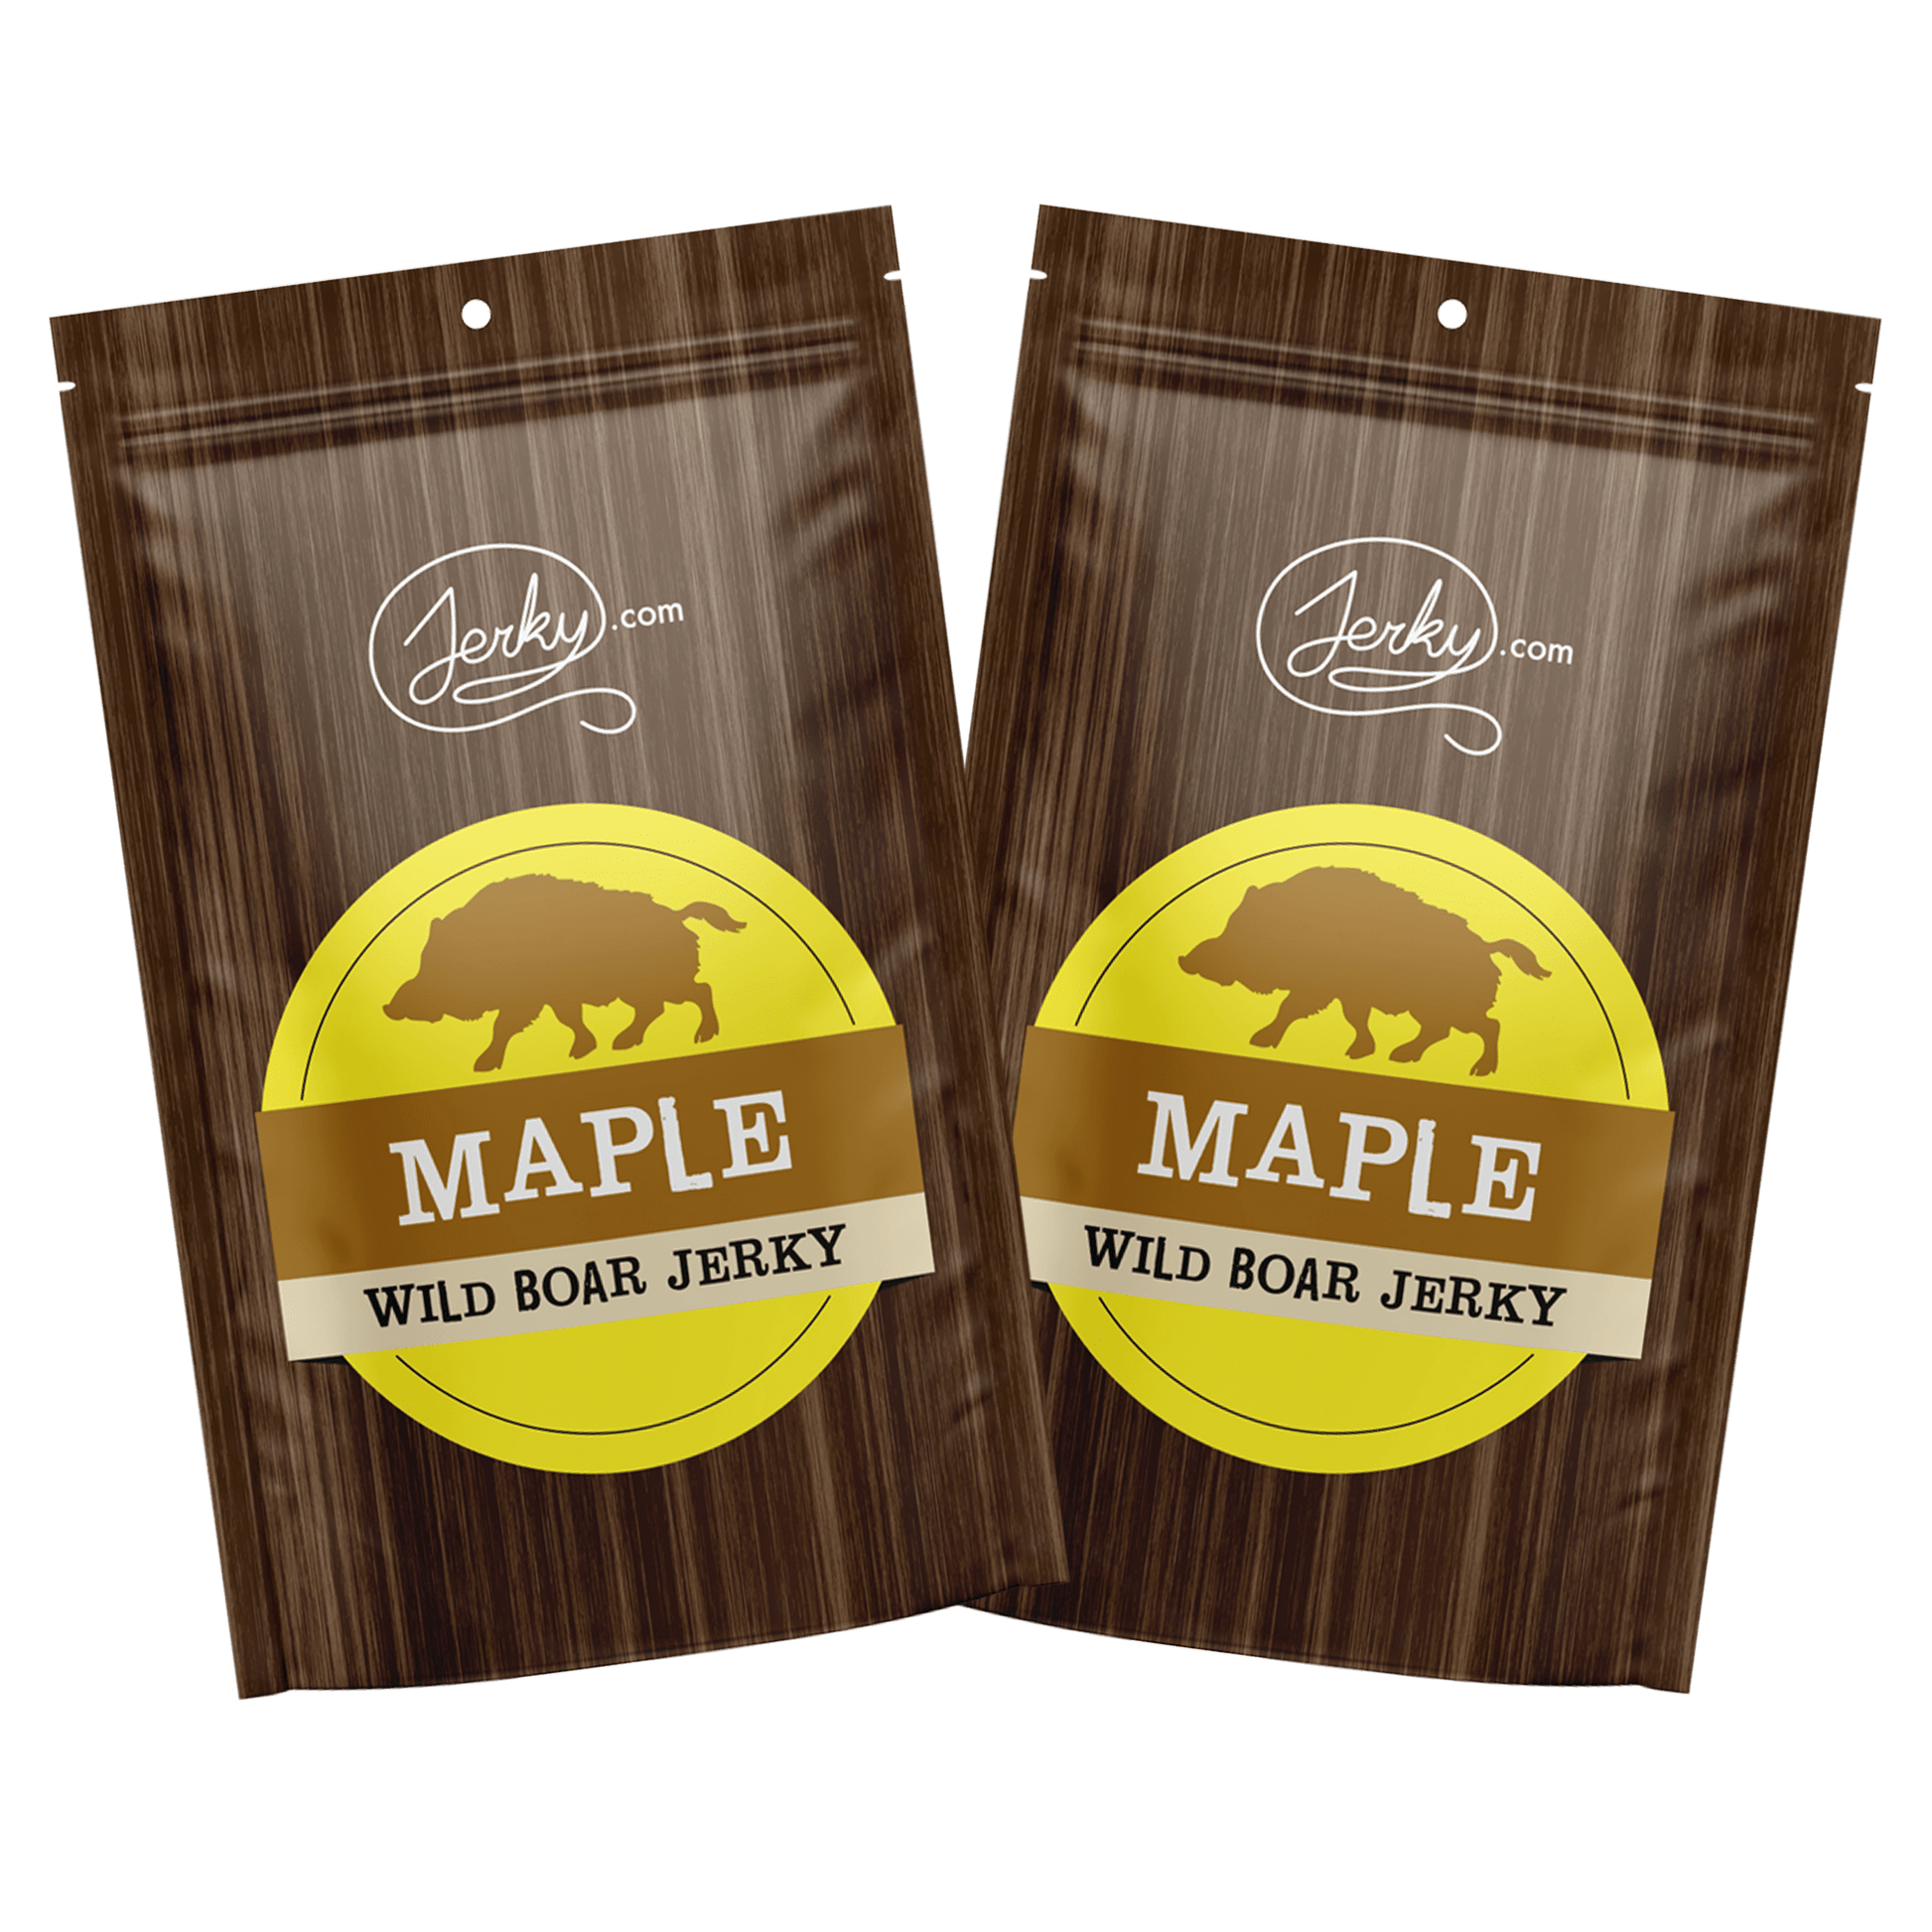 All-Natural Wild Boar Jerky - Maple by Jerky.com